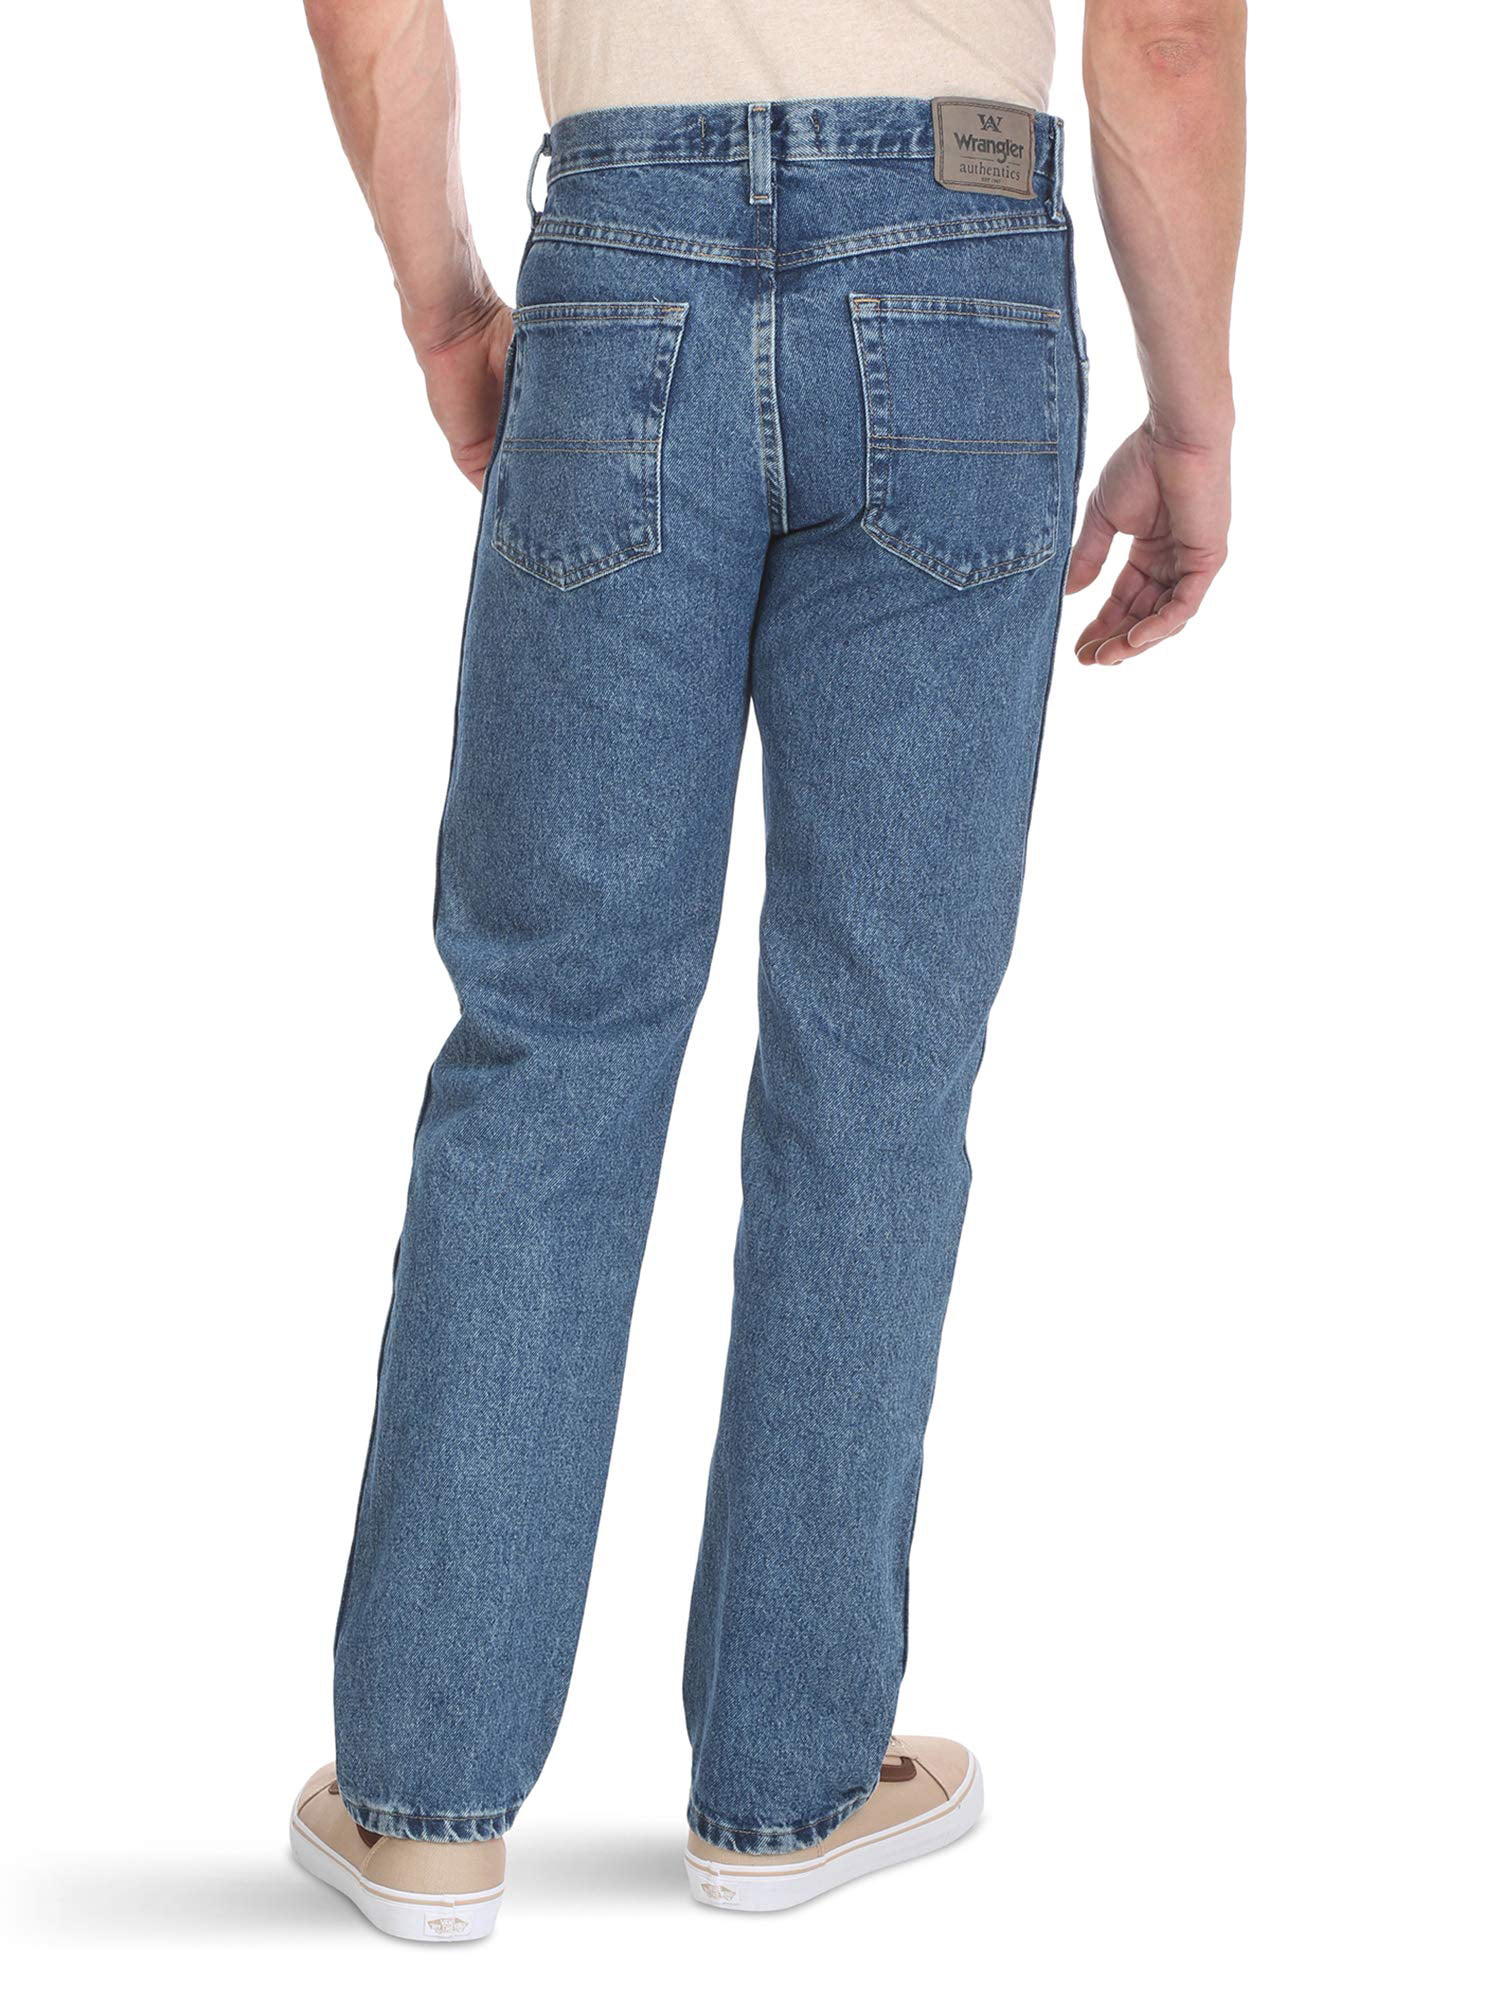 wrangler jeans 40 x 29